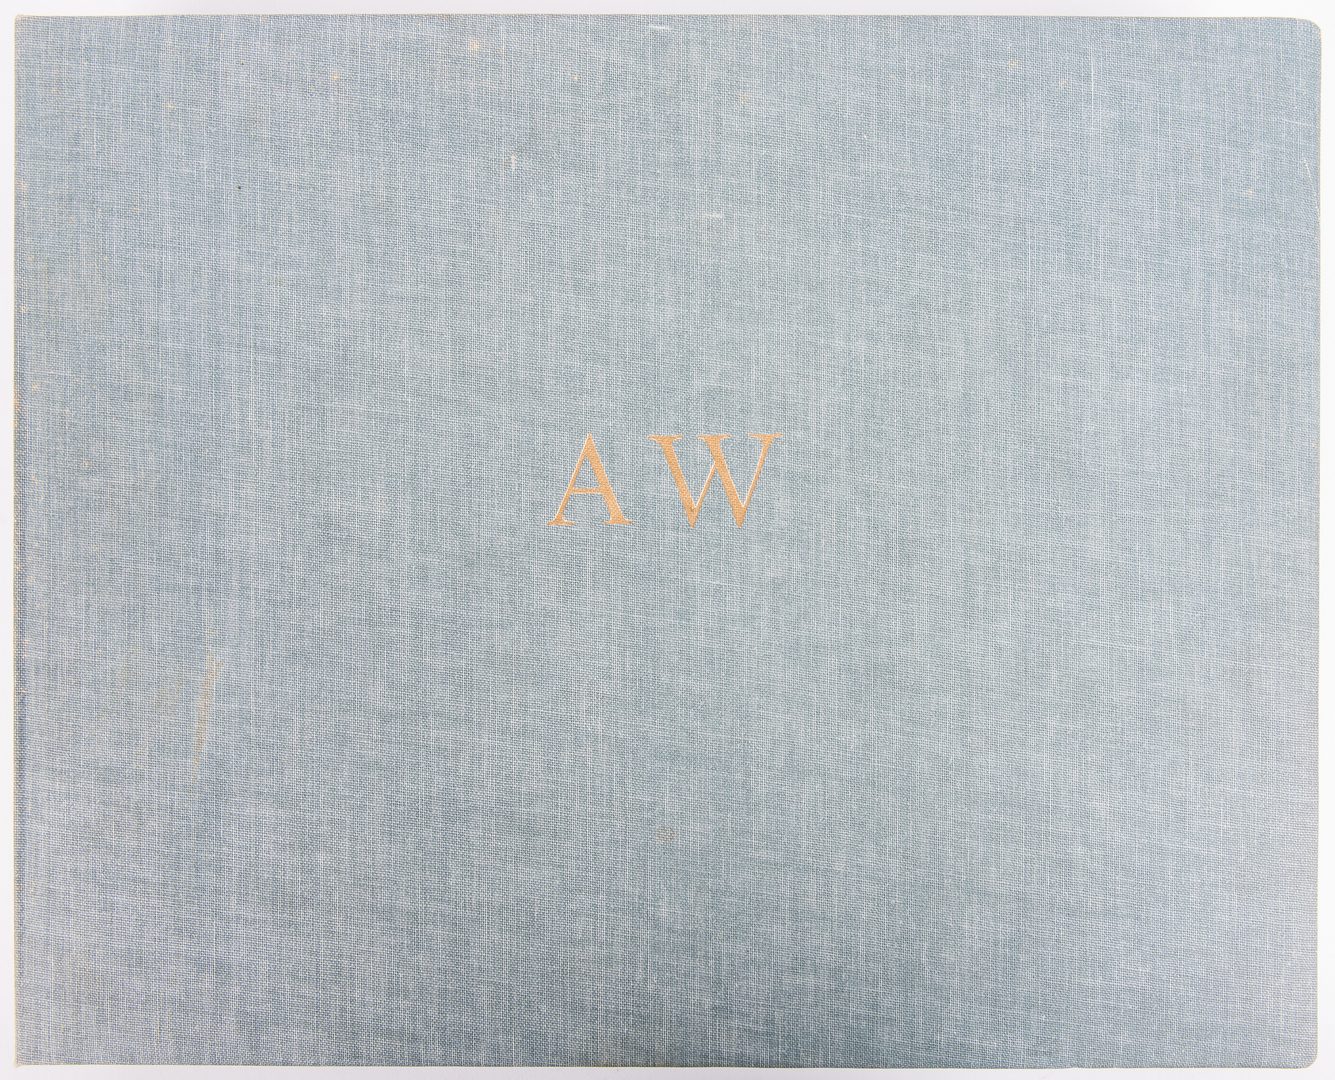 Lot 488: Ltd. ed. Wyeth Book, Artist Signed